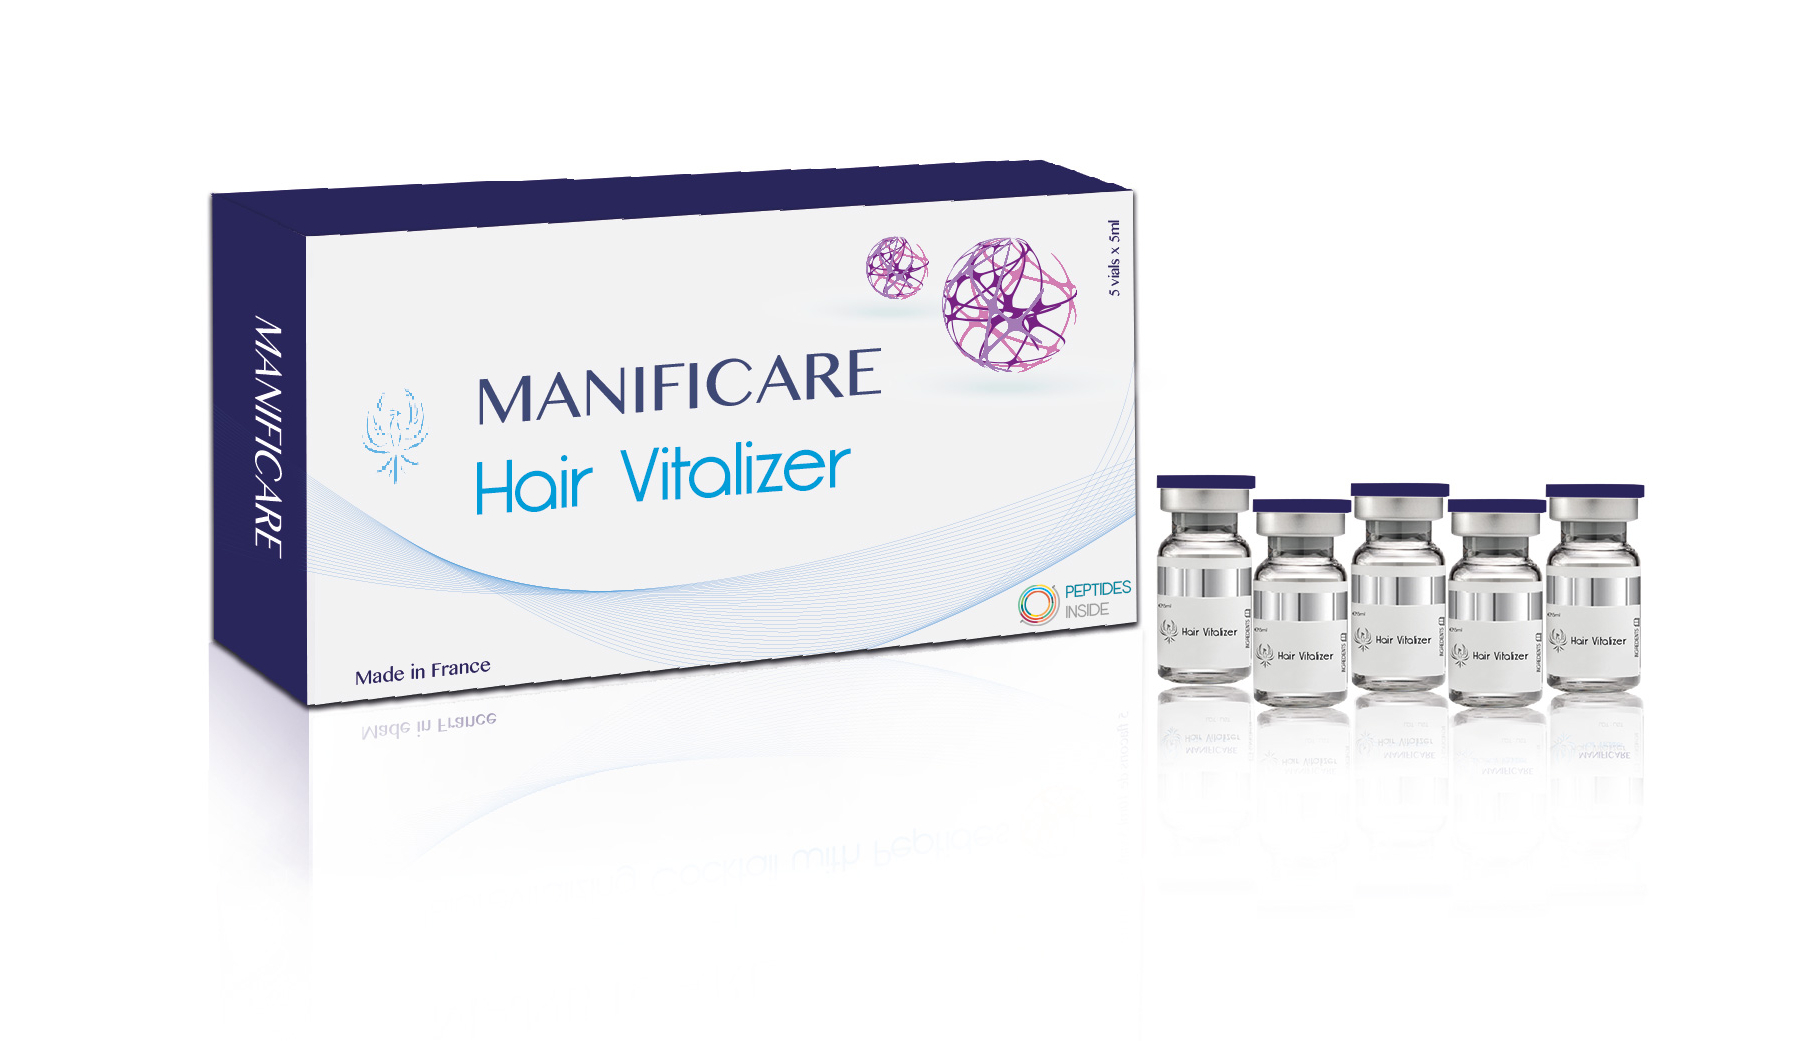 препарат Manificare Hair Vitalizer (манификейр найр виталайзер)